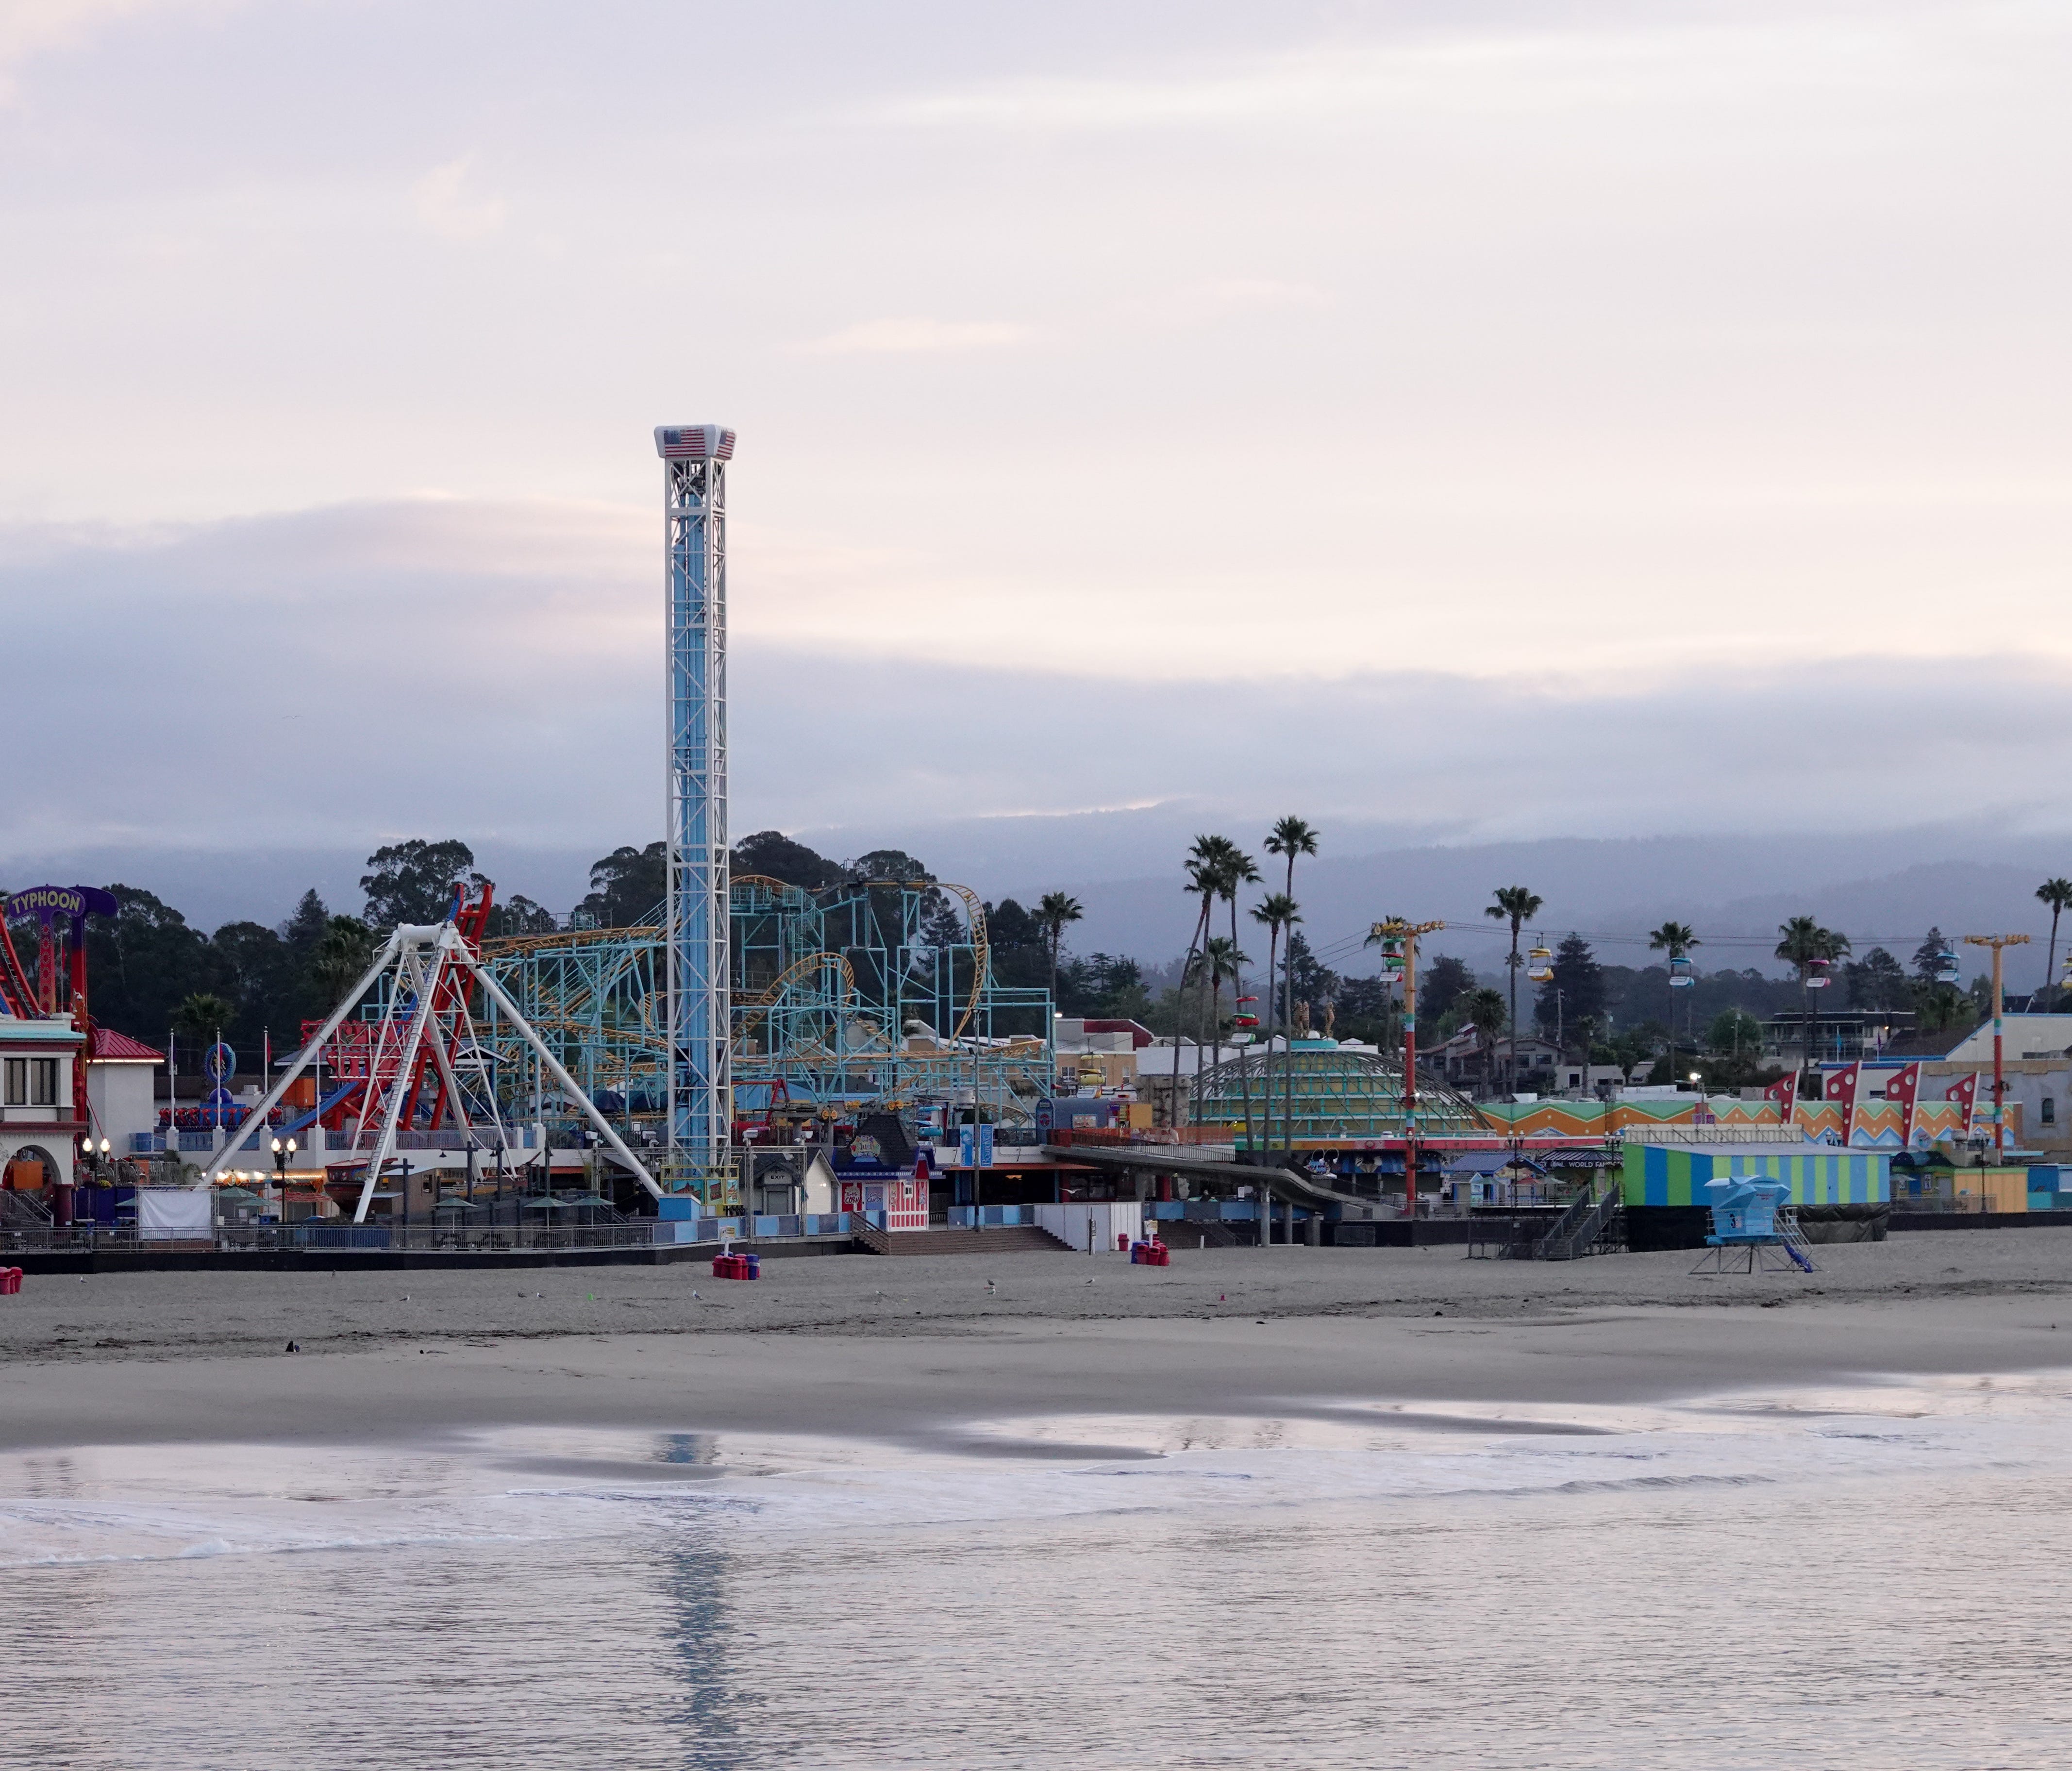 The Santa Cruz Beach Boardwalk rides before they open to the public.